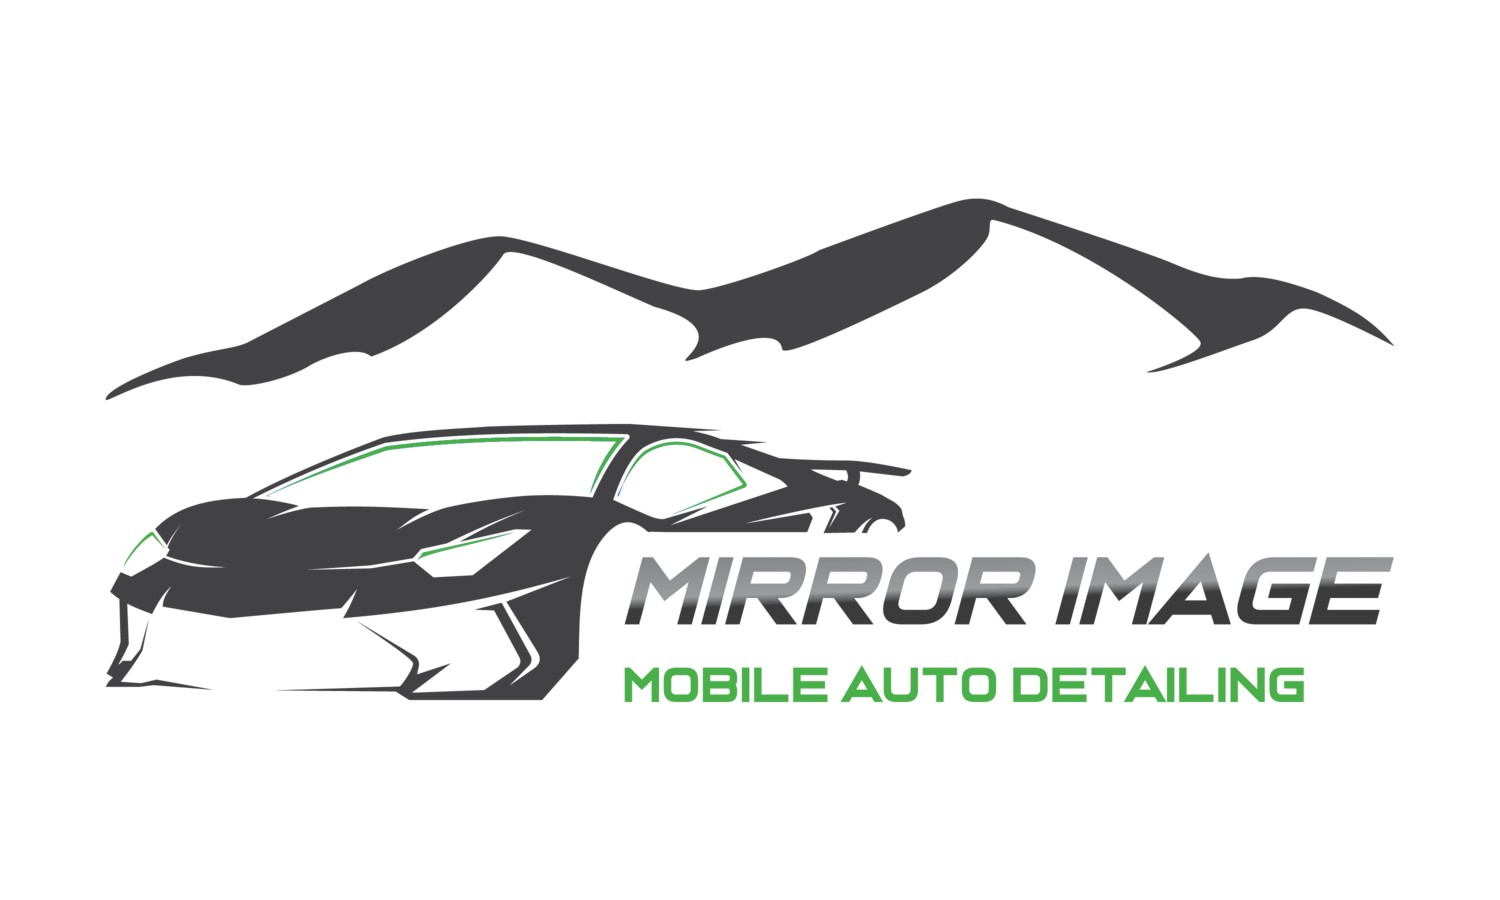 Mirror Image Mobile Auto Detailing (Copy)